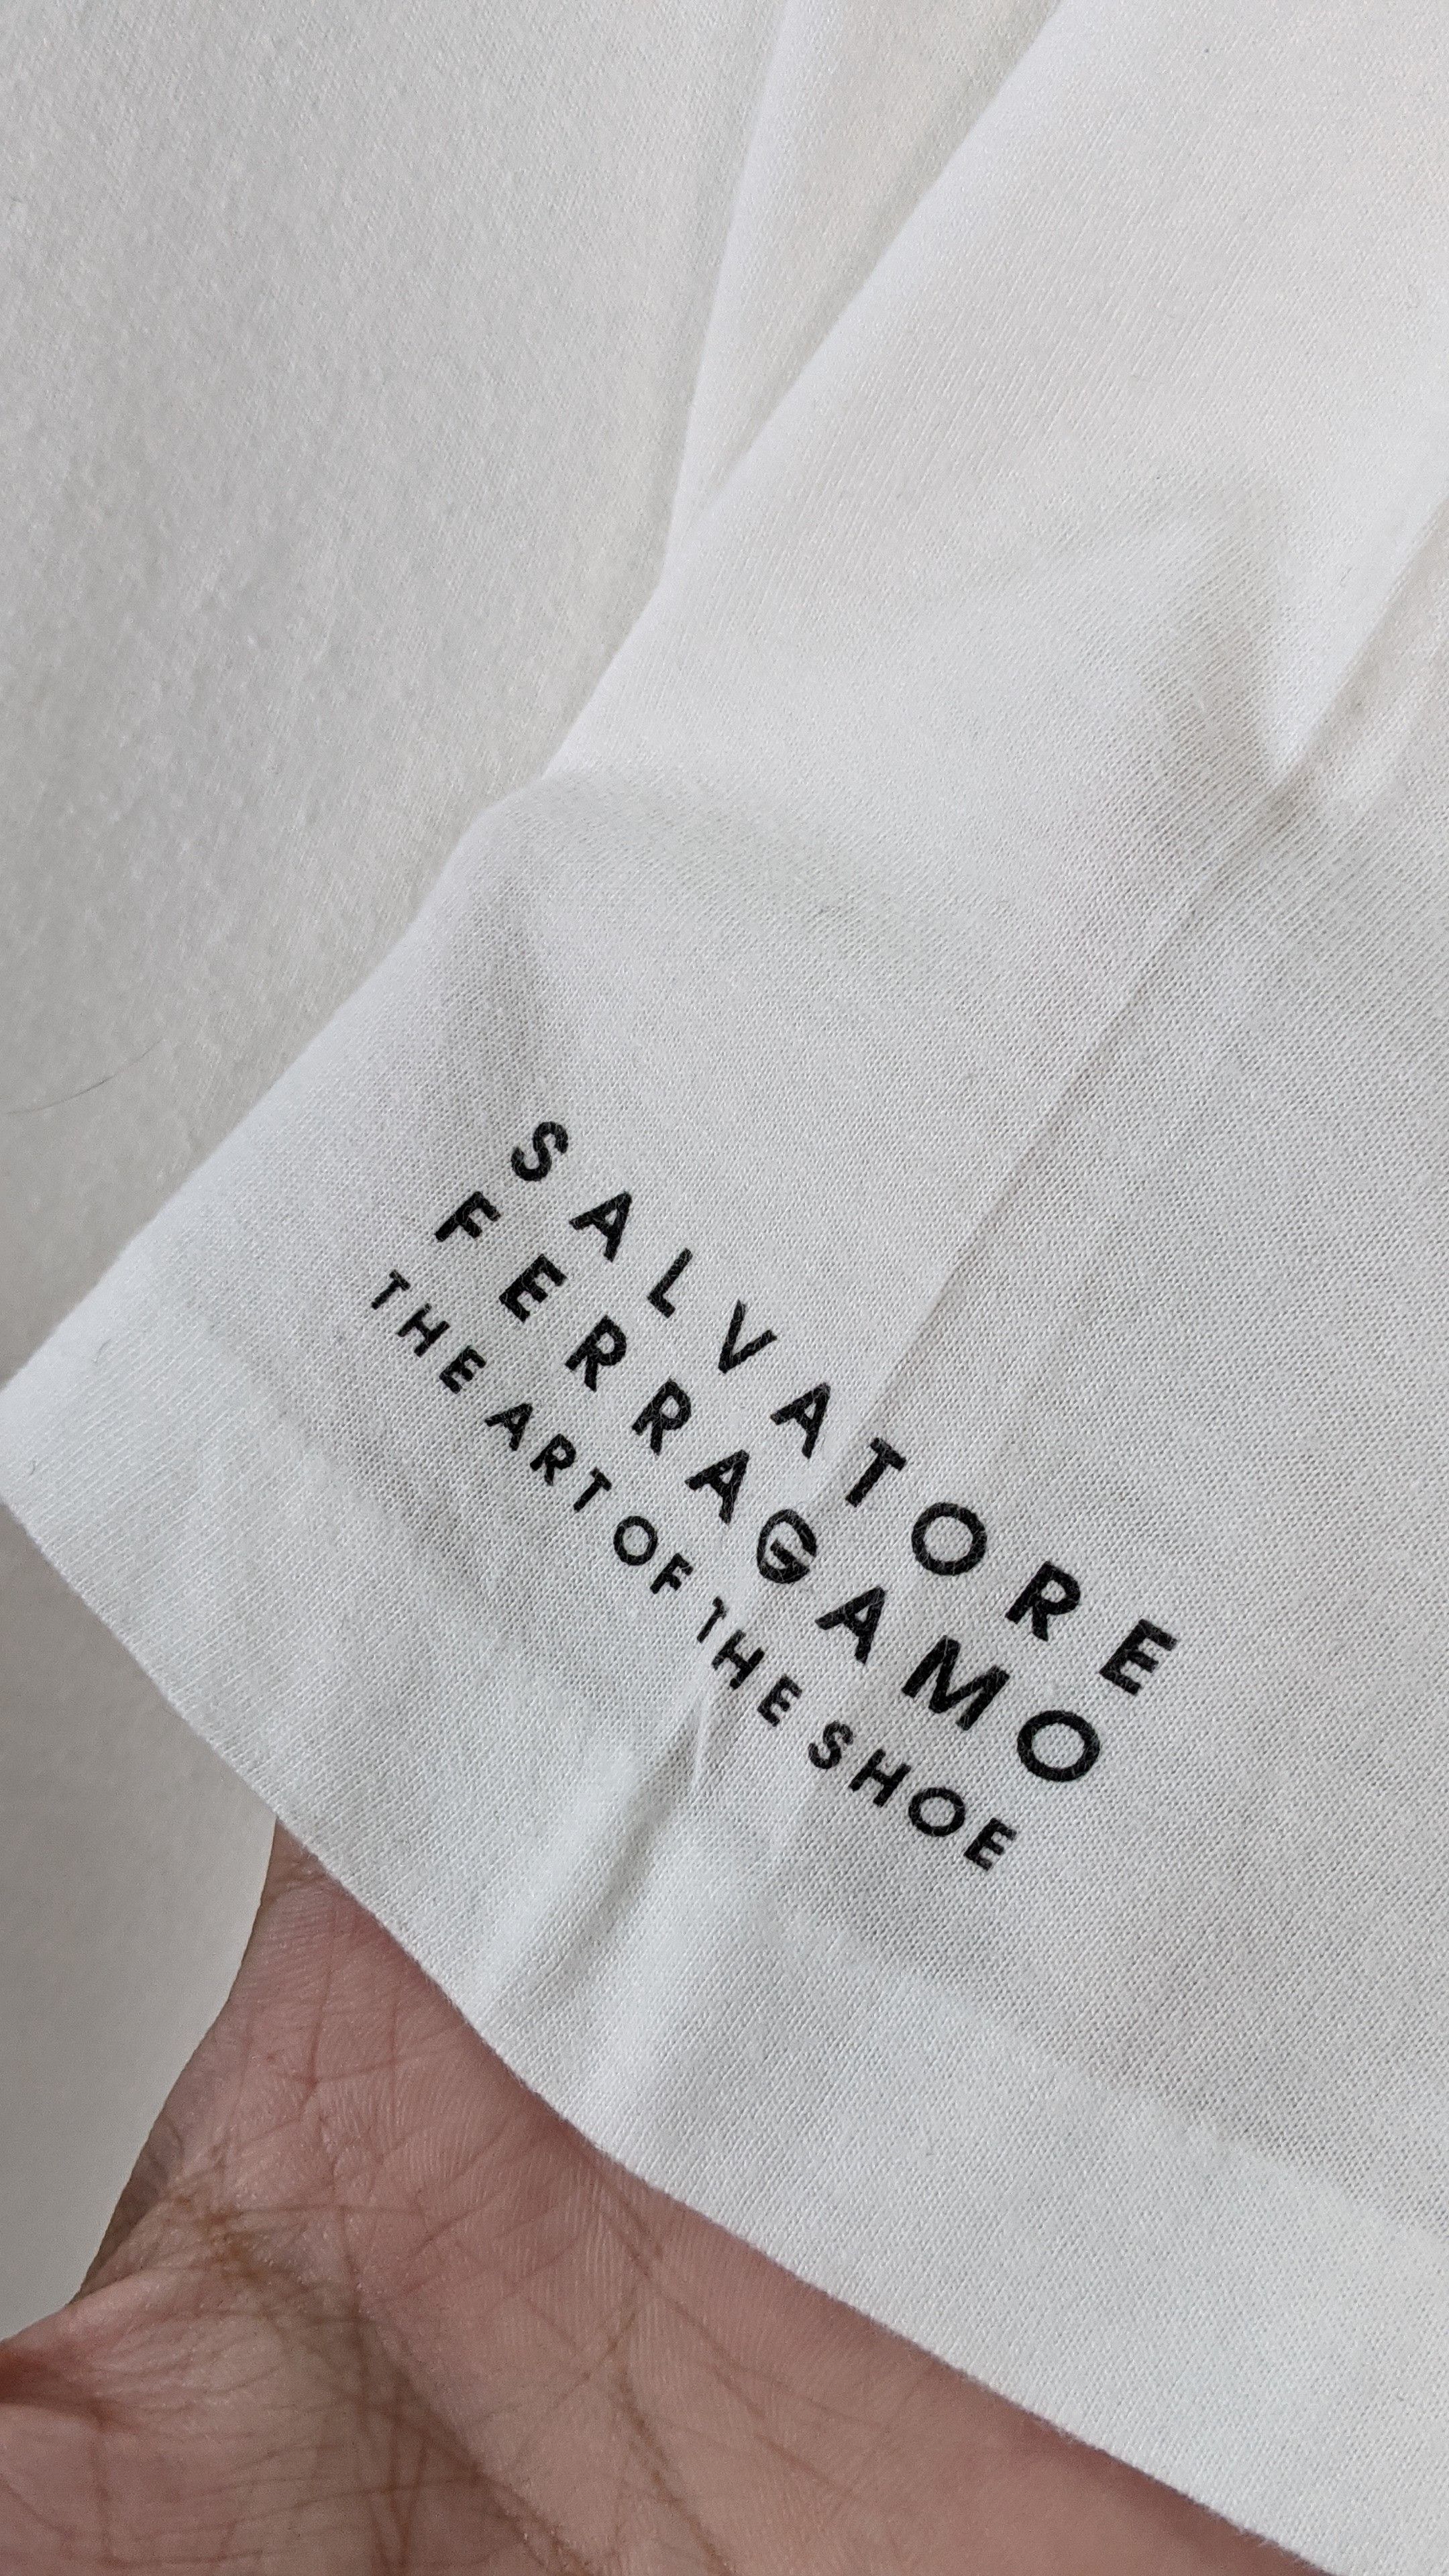 Salvatore Ferragamo The Art of the Shoe Shirt - 3